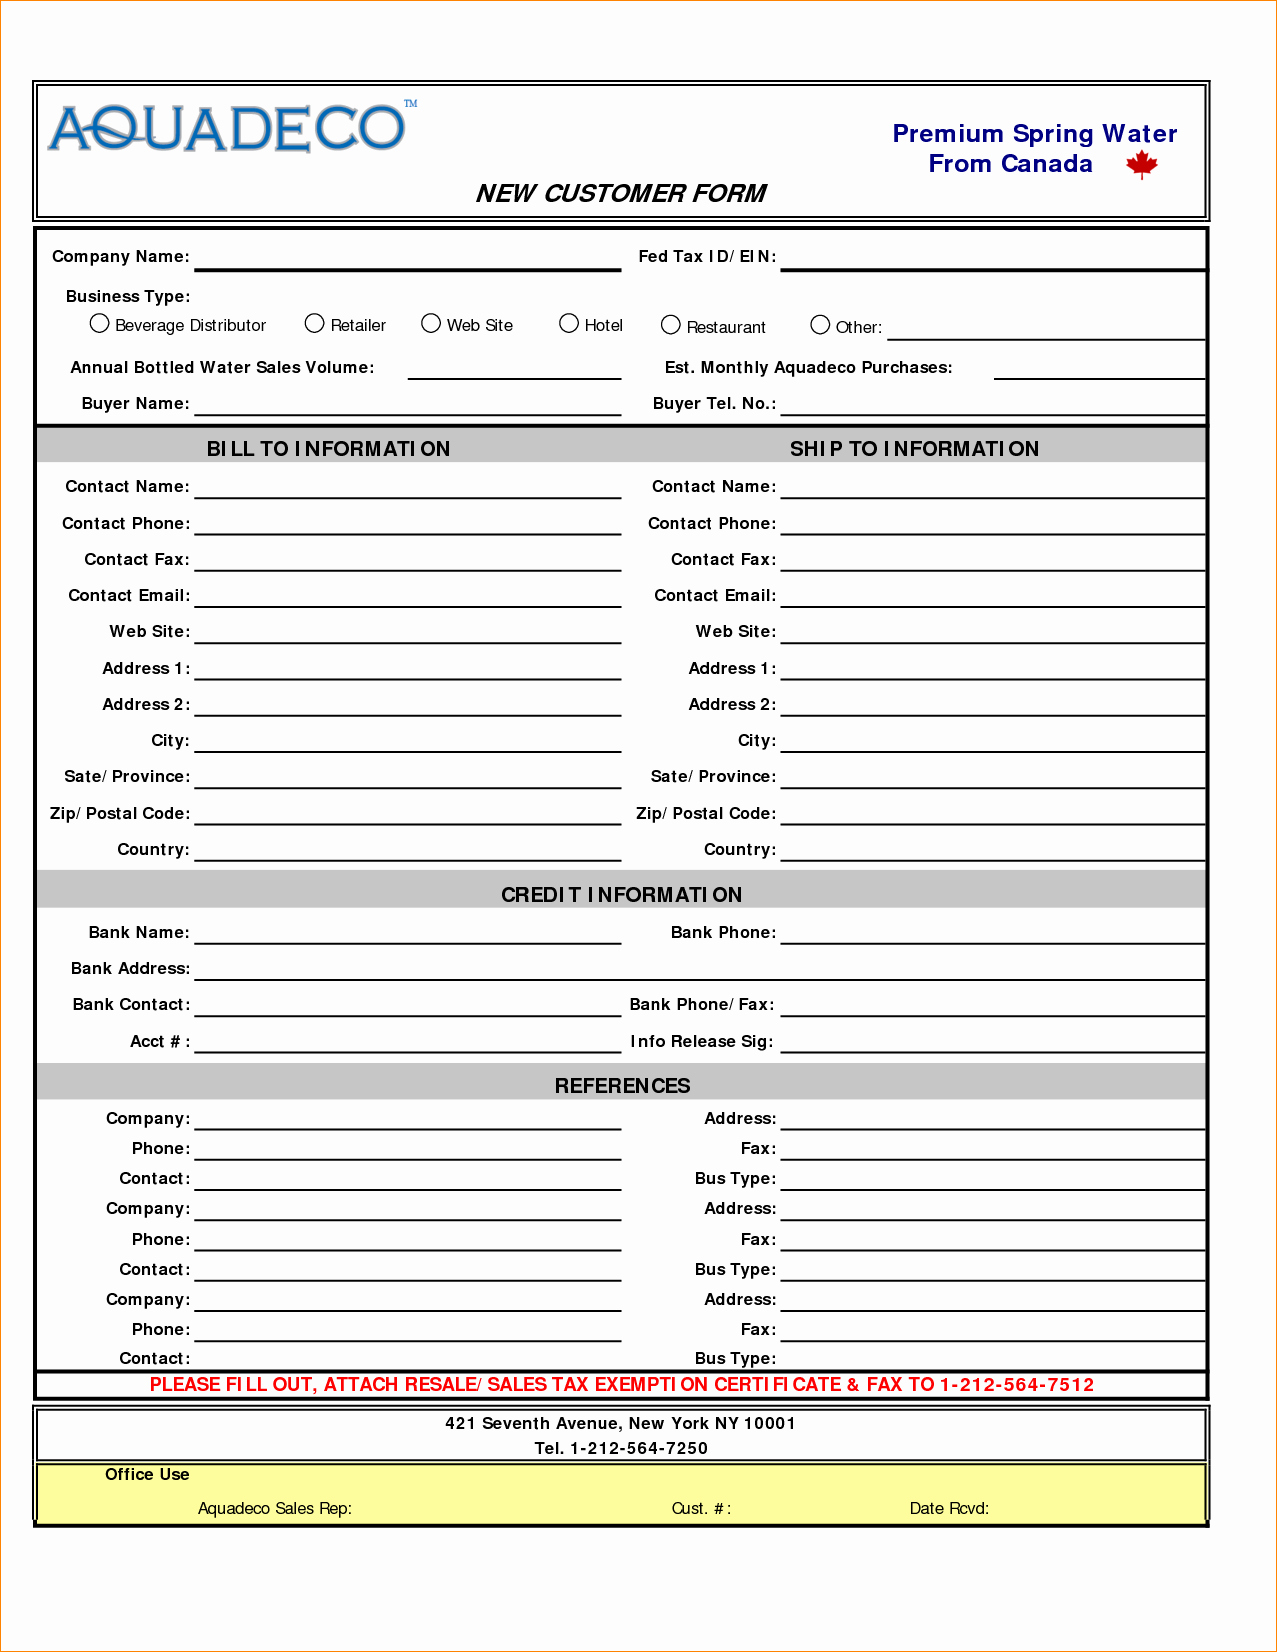 Customer Contact Information form Template Fresh New Customer form Template Word Portablegasgrillweber